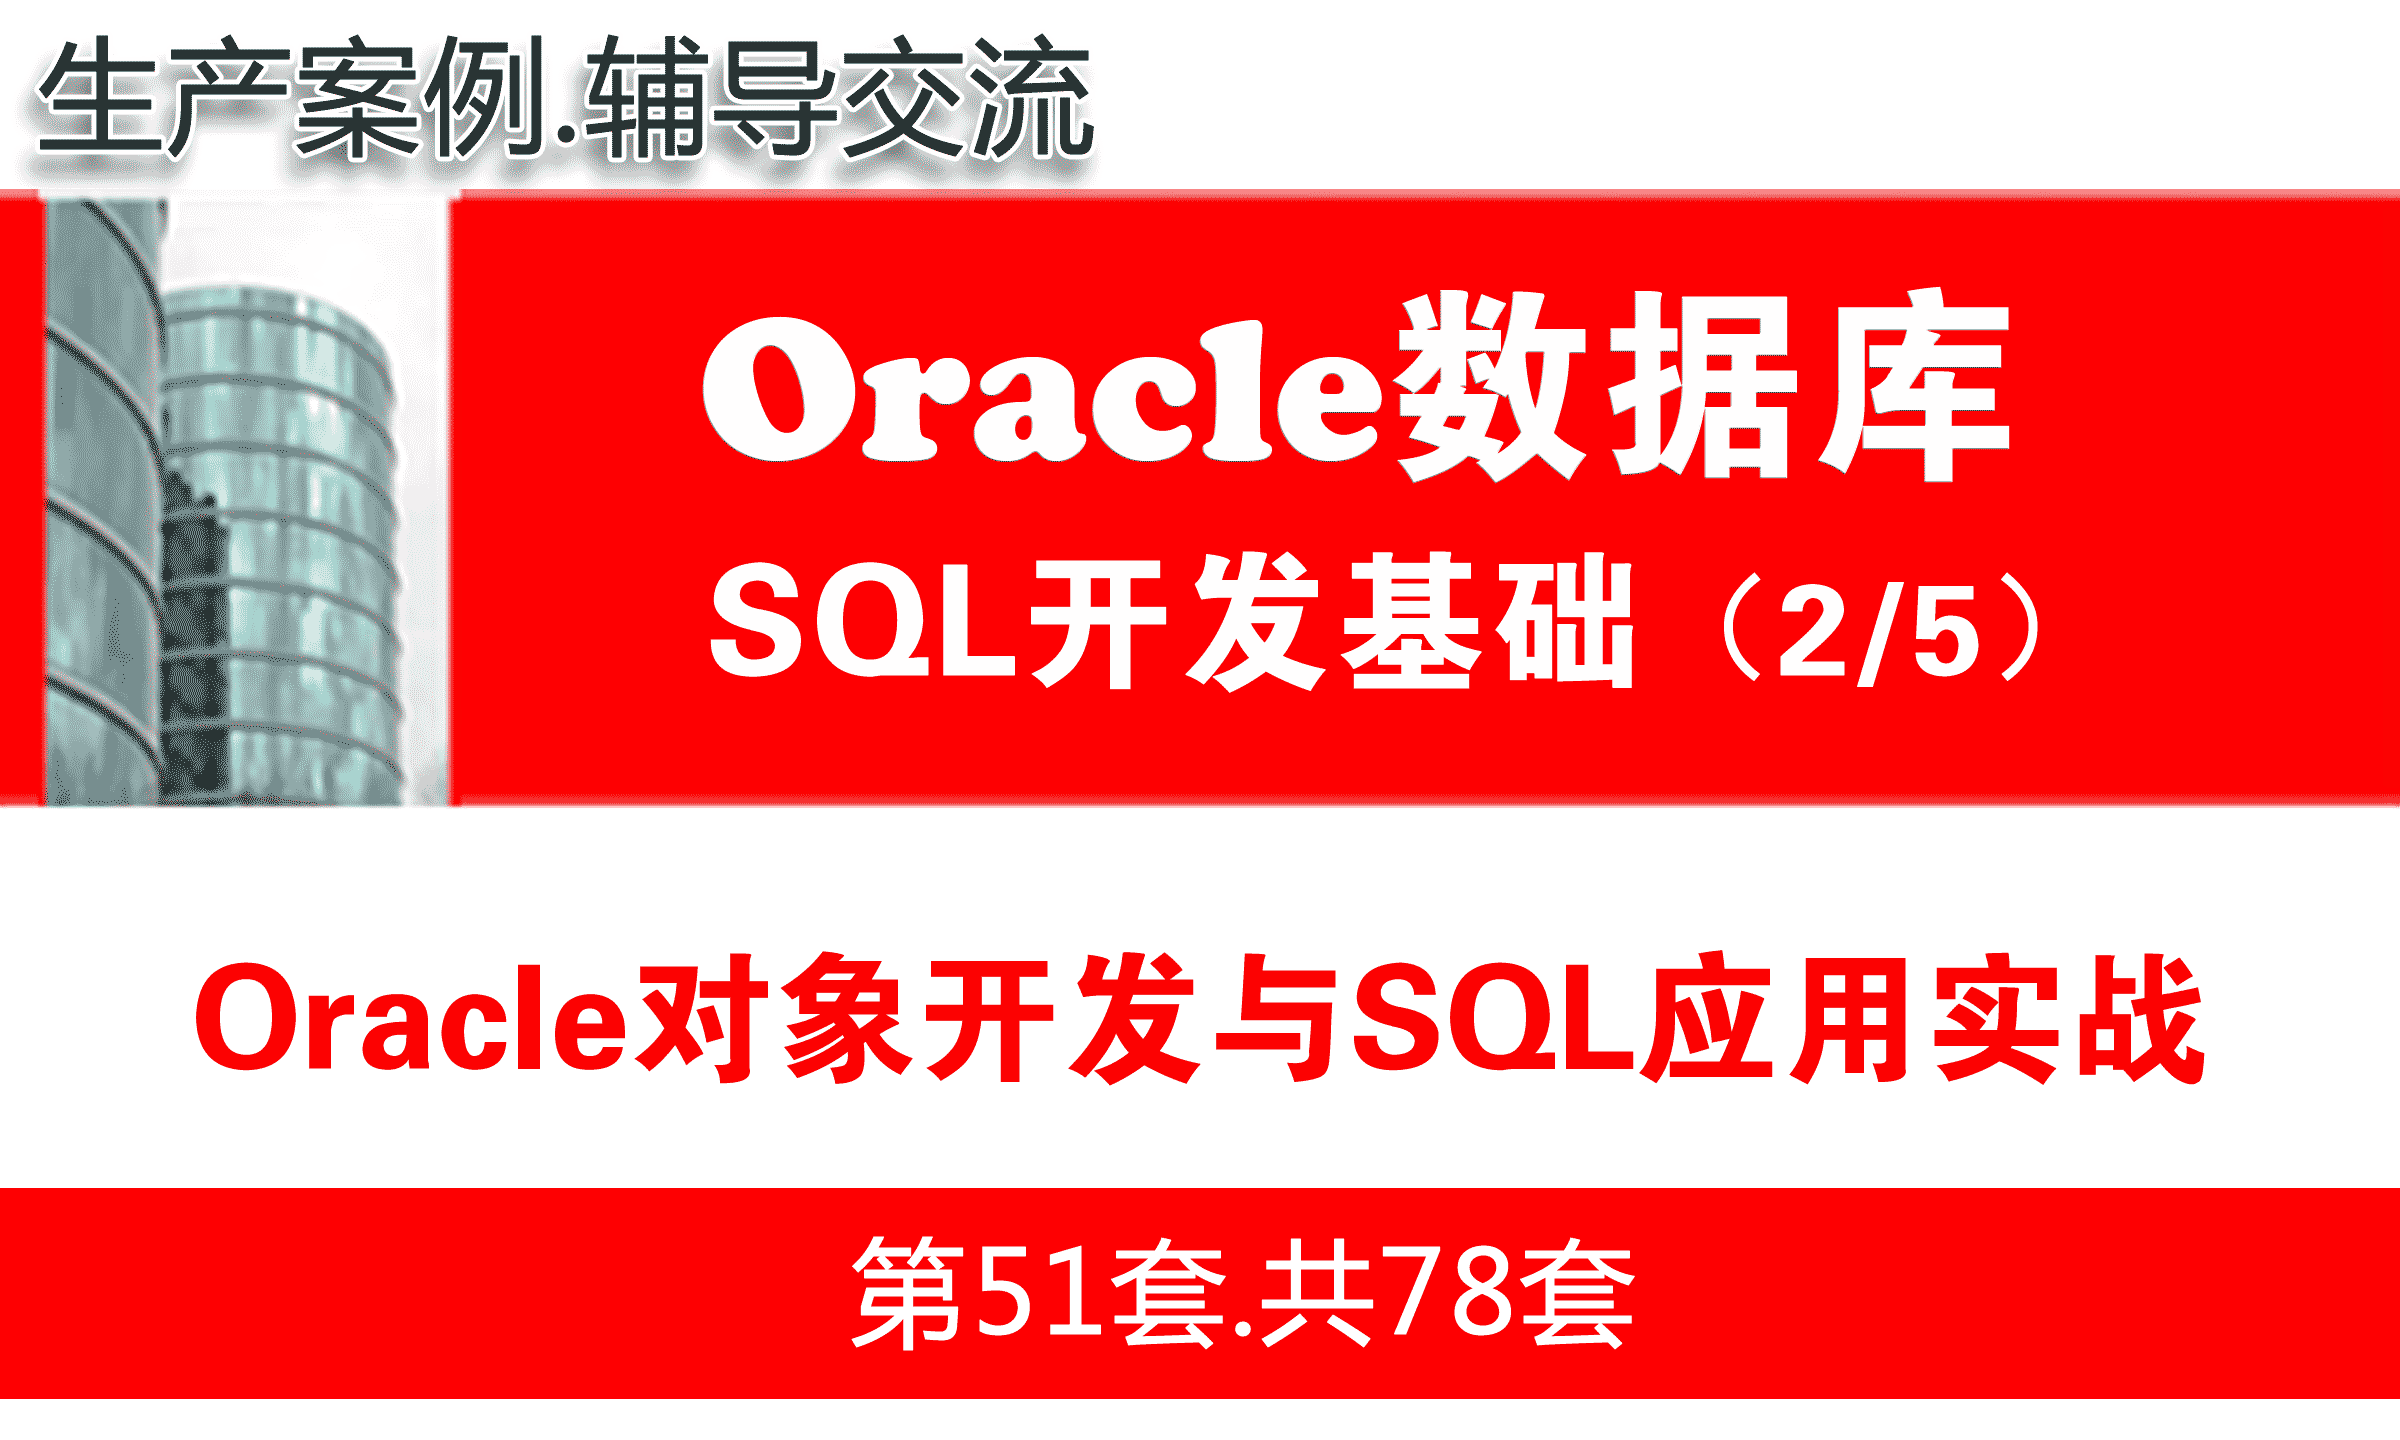 Oracle对象开发与SQL应用实战_Oracle数据库SQL语言开发与应用实战02